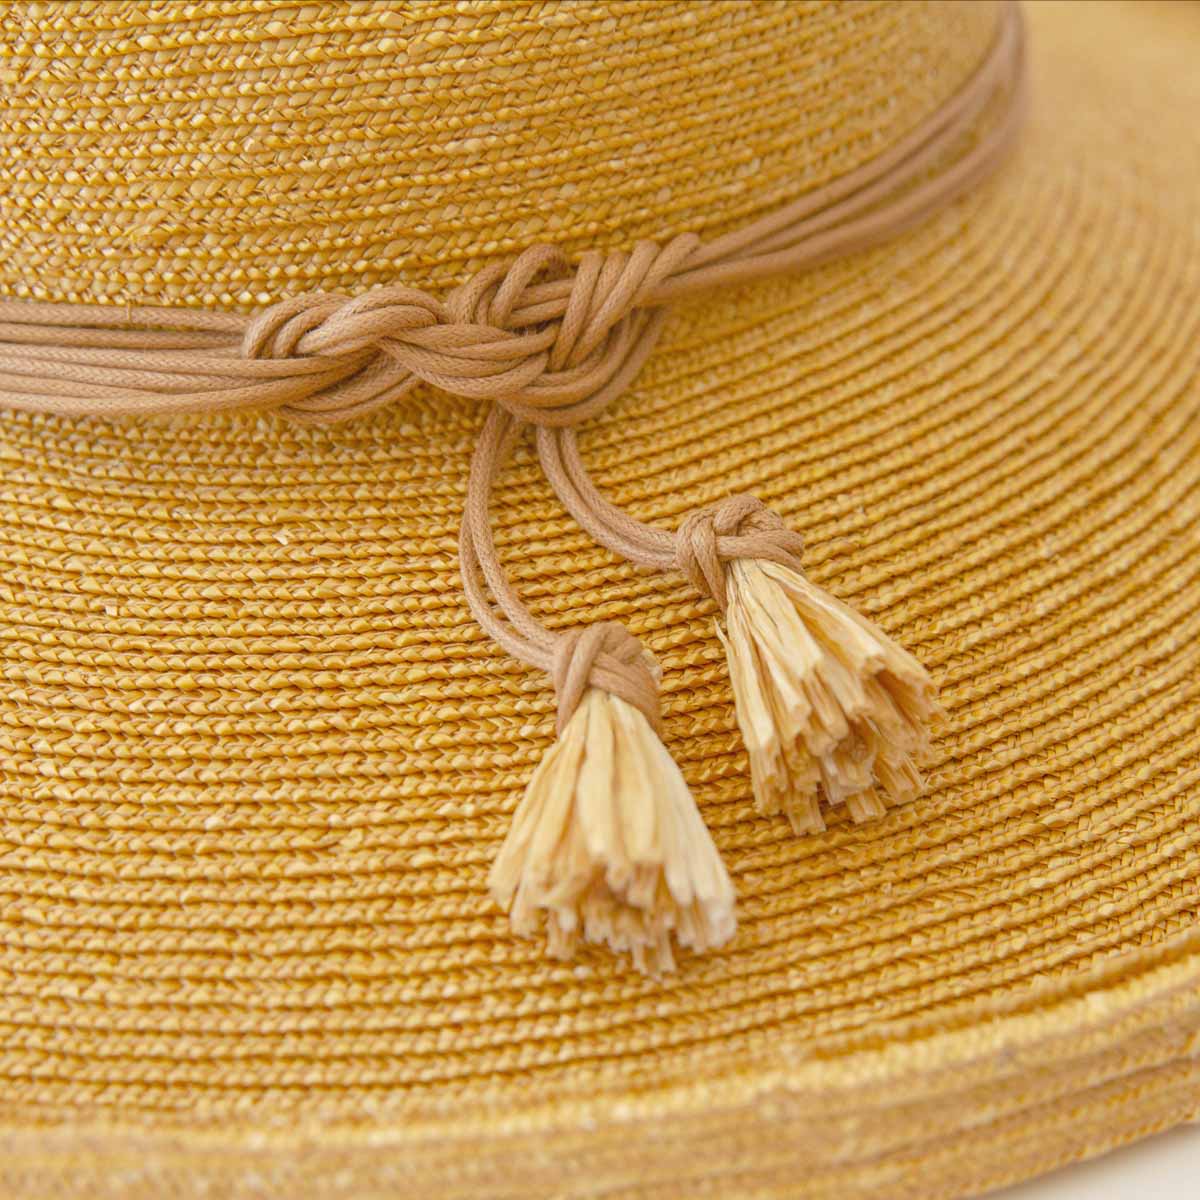 Axel Mano Glenmore Milanese Straw Hat